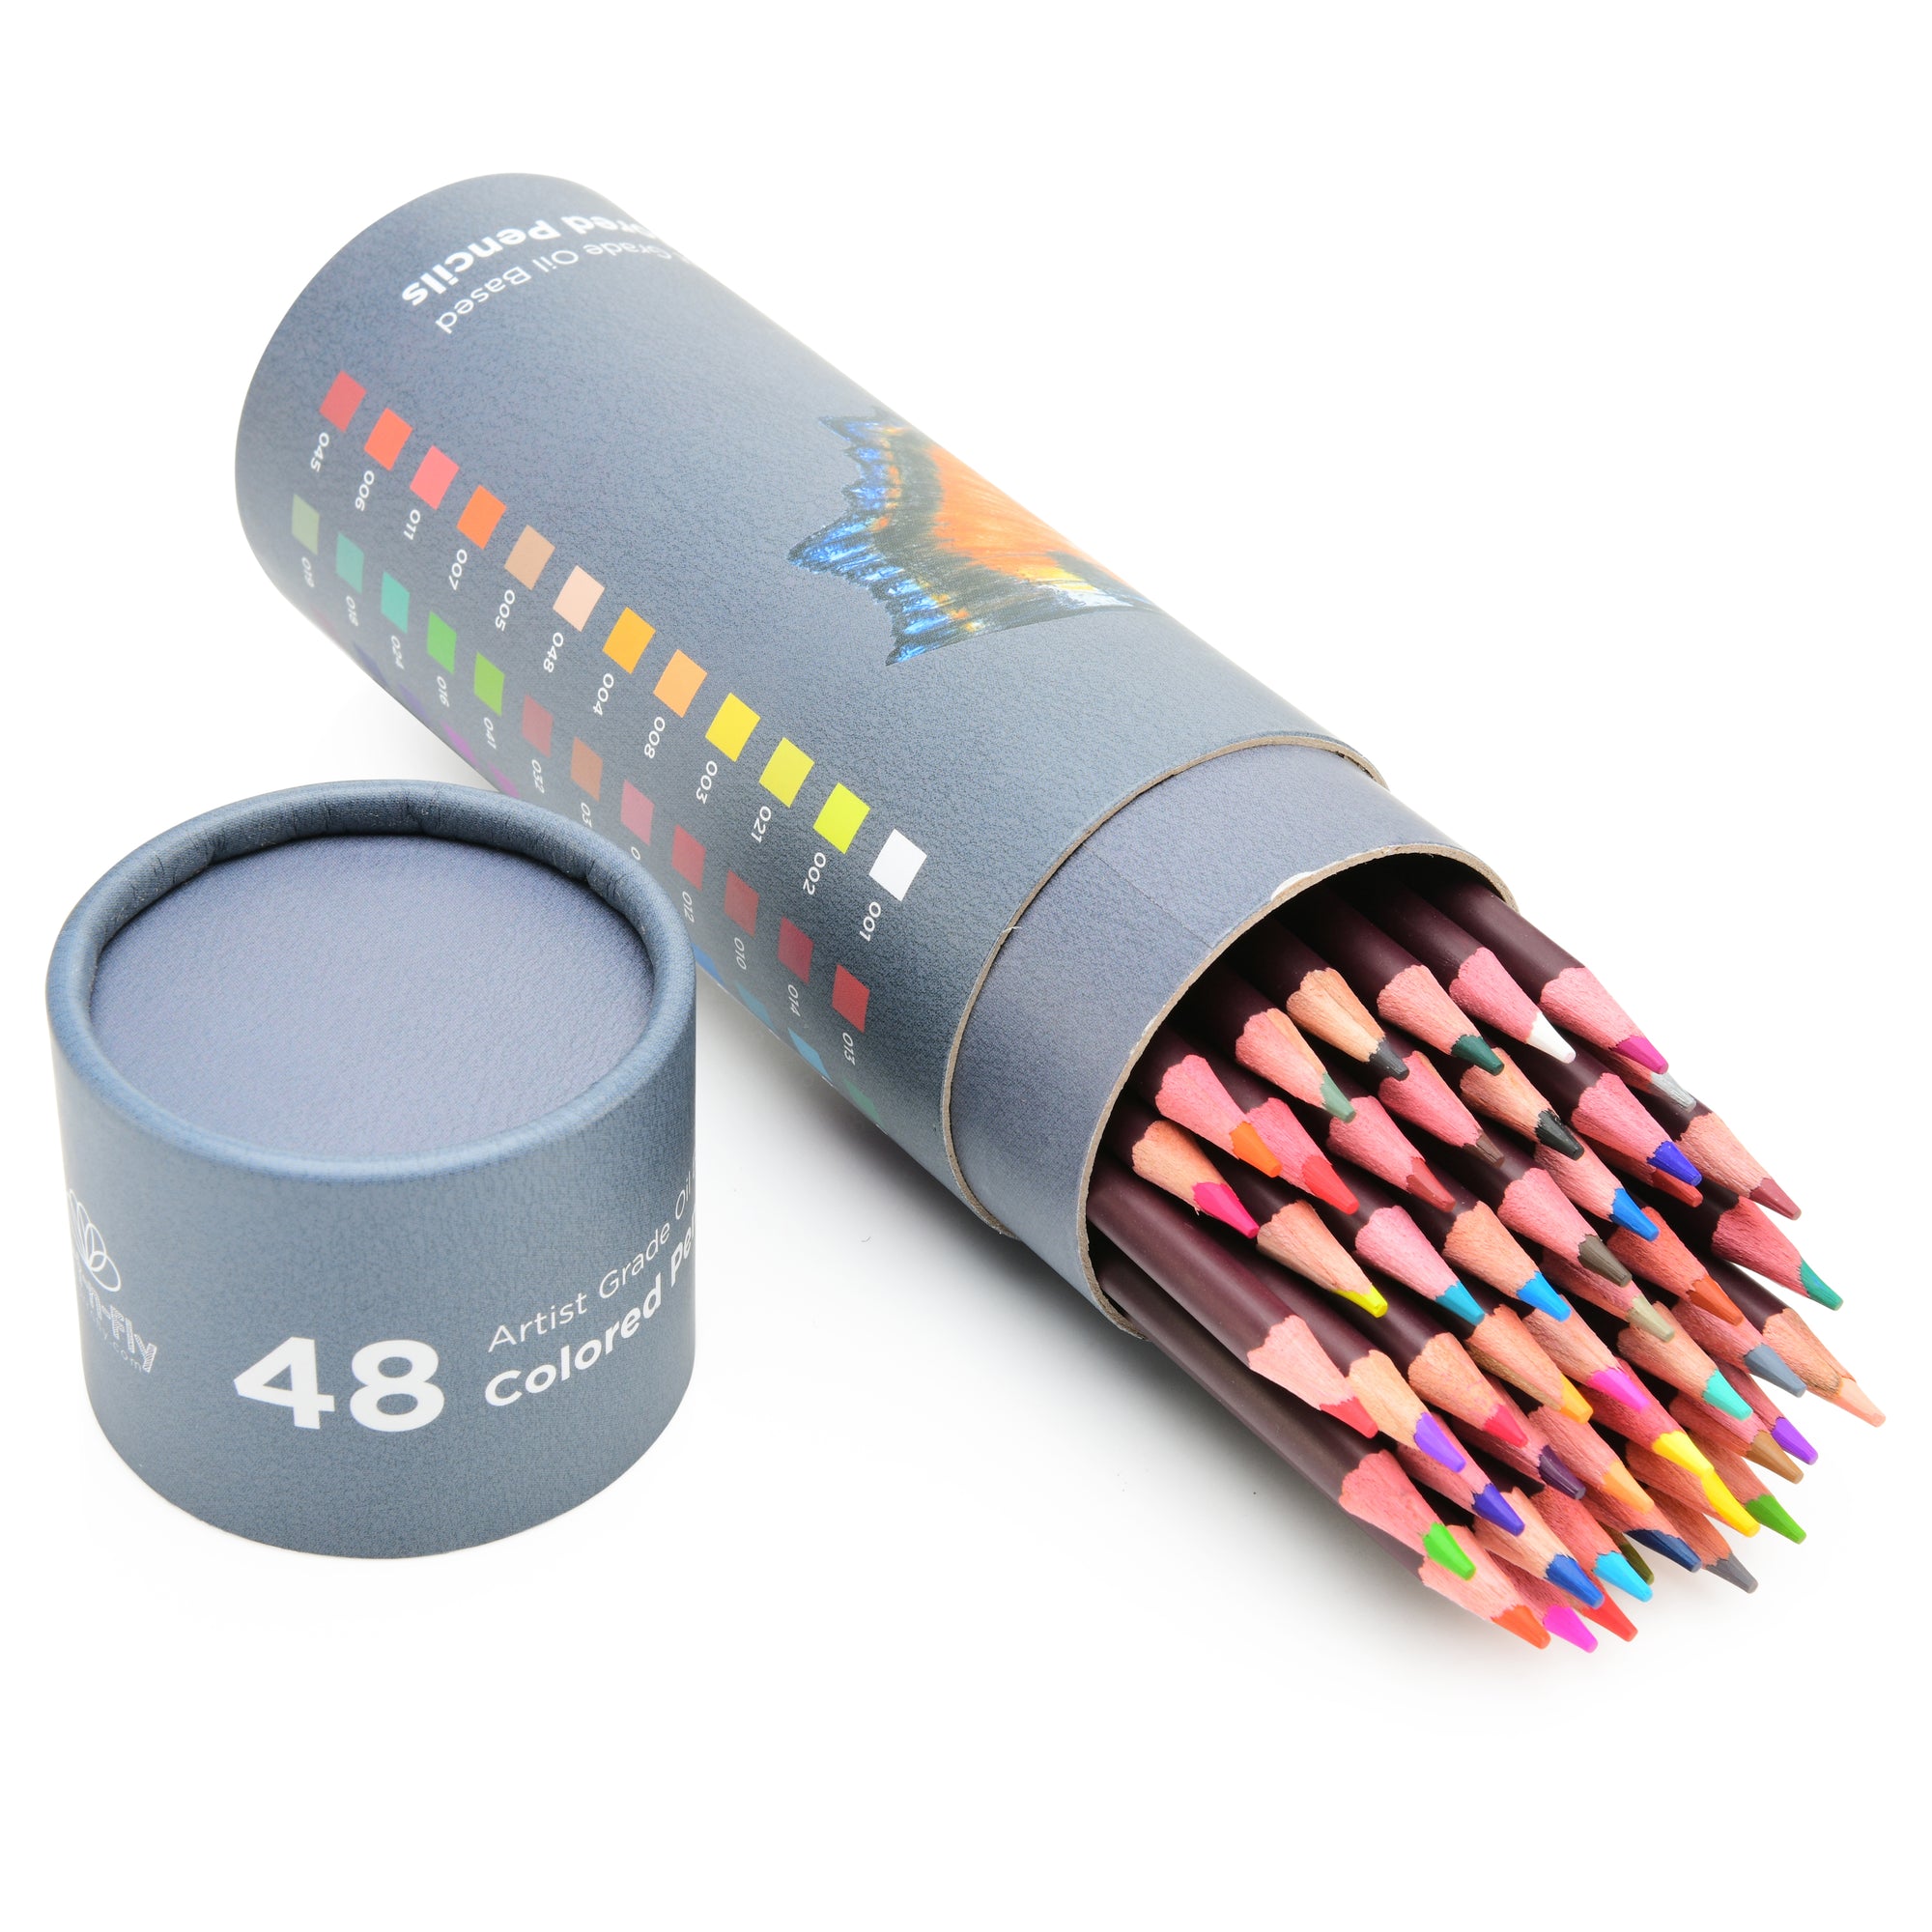 Artist Colored Pencils Set,12, 24 Colors Oil-based Drawing Pencils